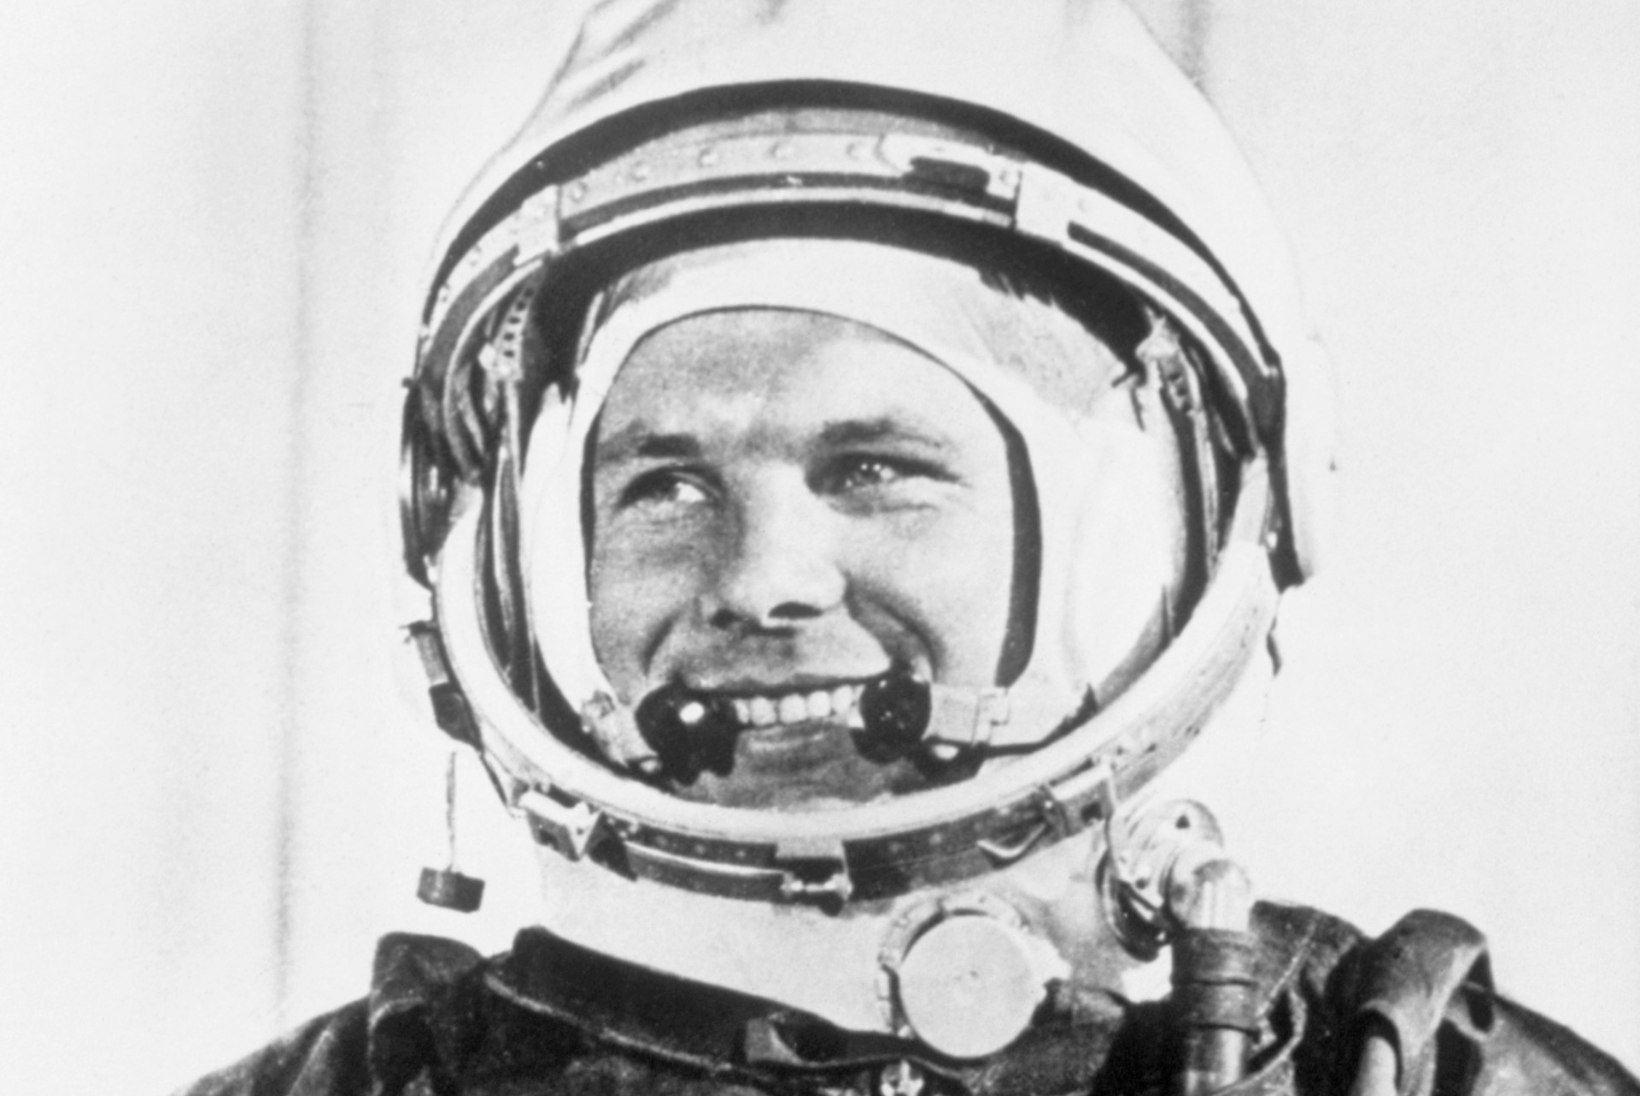 Gagarin ei lennanudki kosmosesse esimesena? Et seda varjata, ta tapeti?